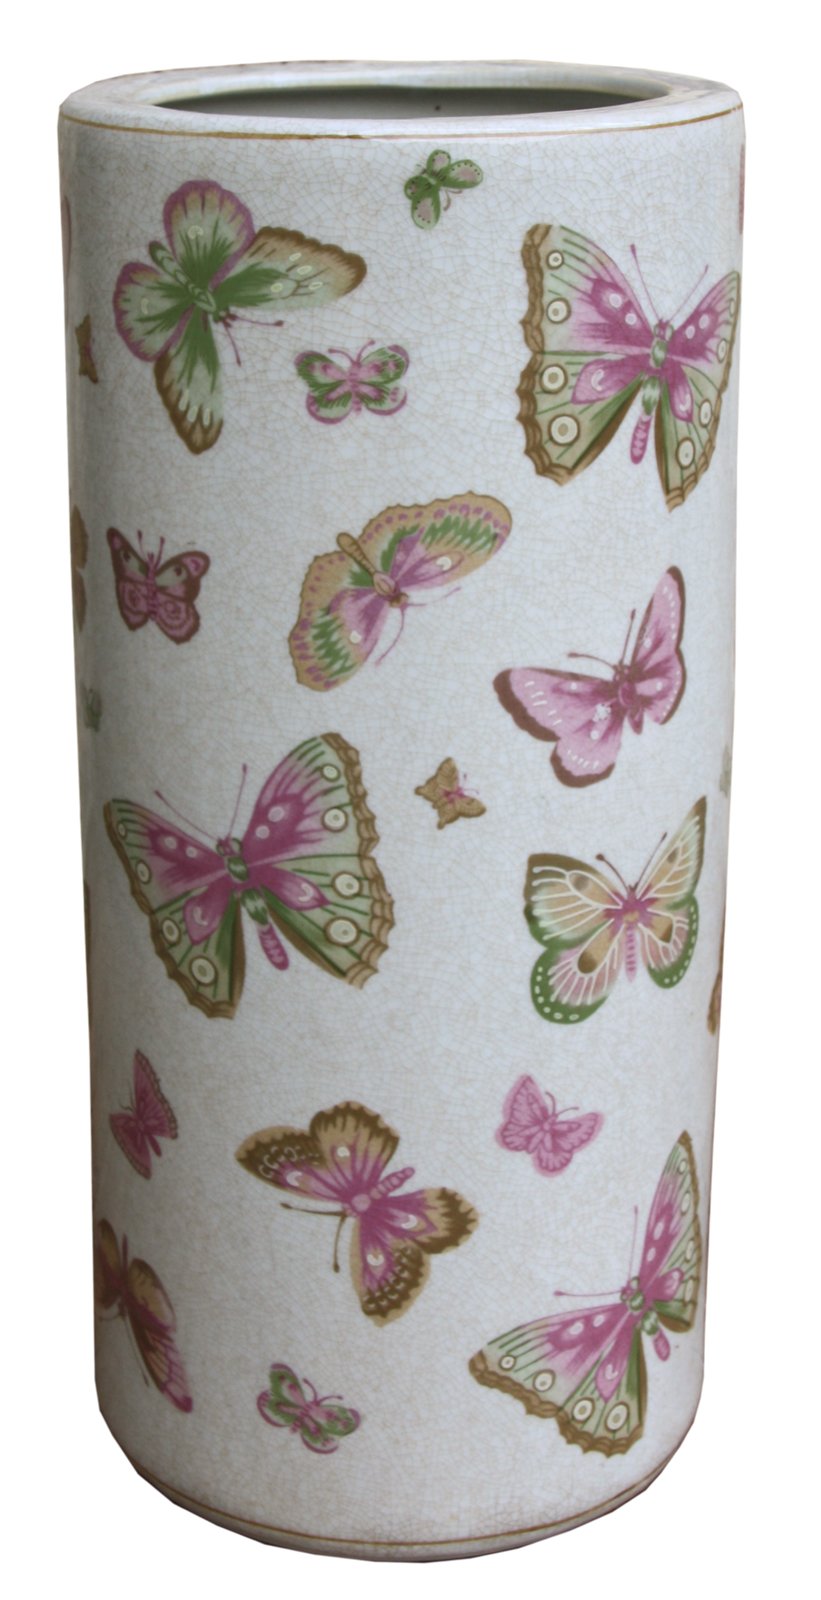 Ceramic umbrella stand, butterfly design